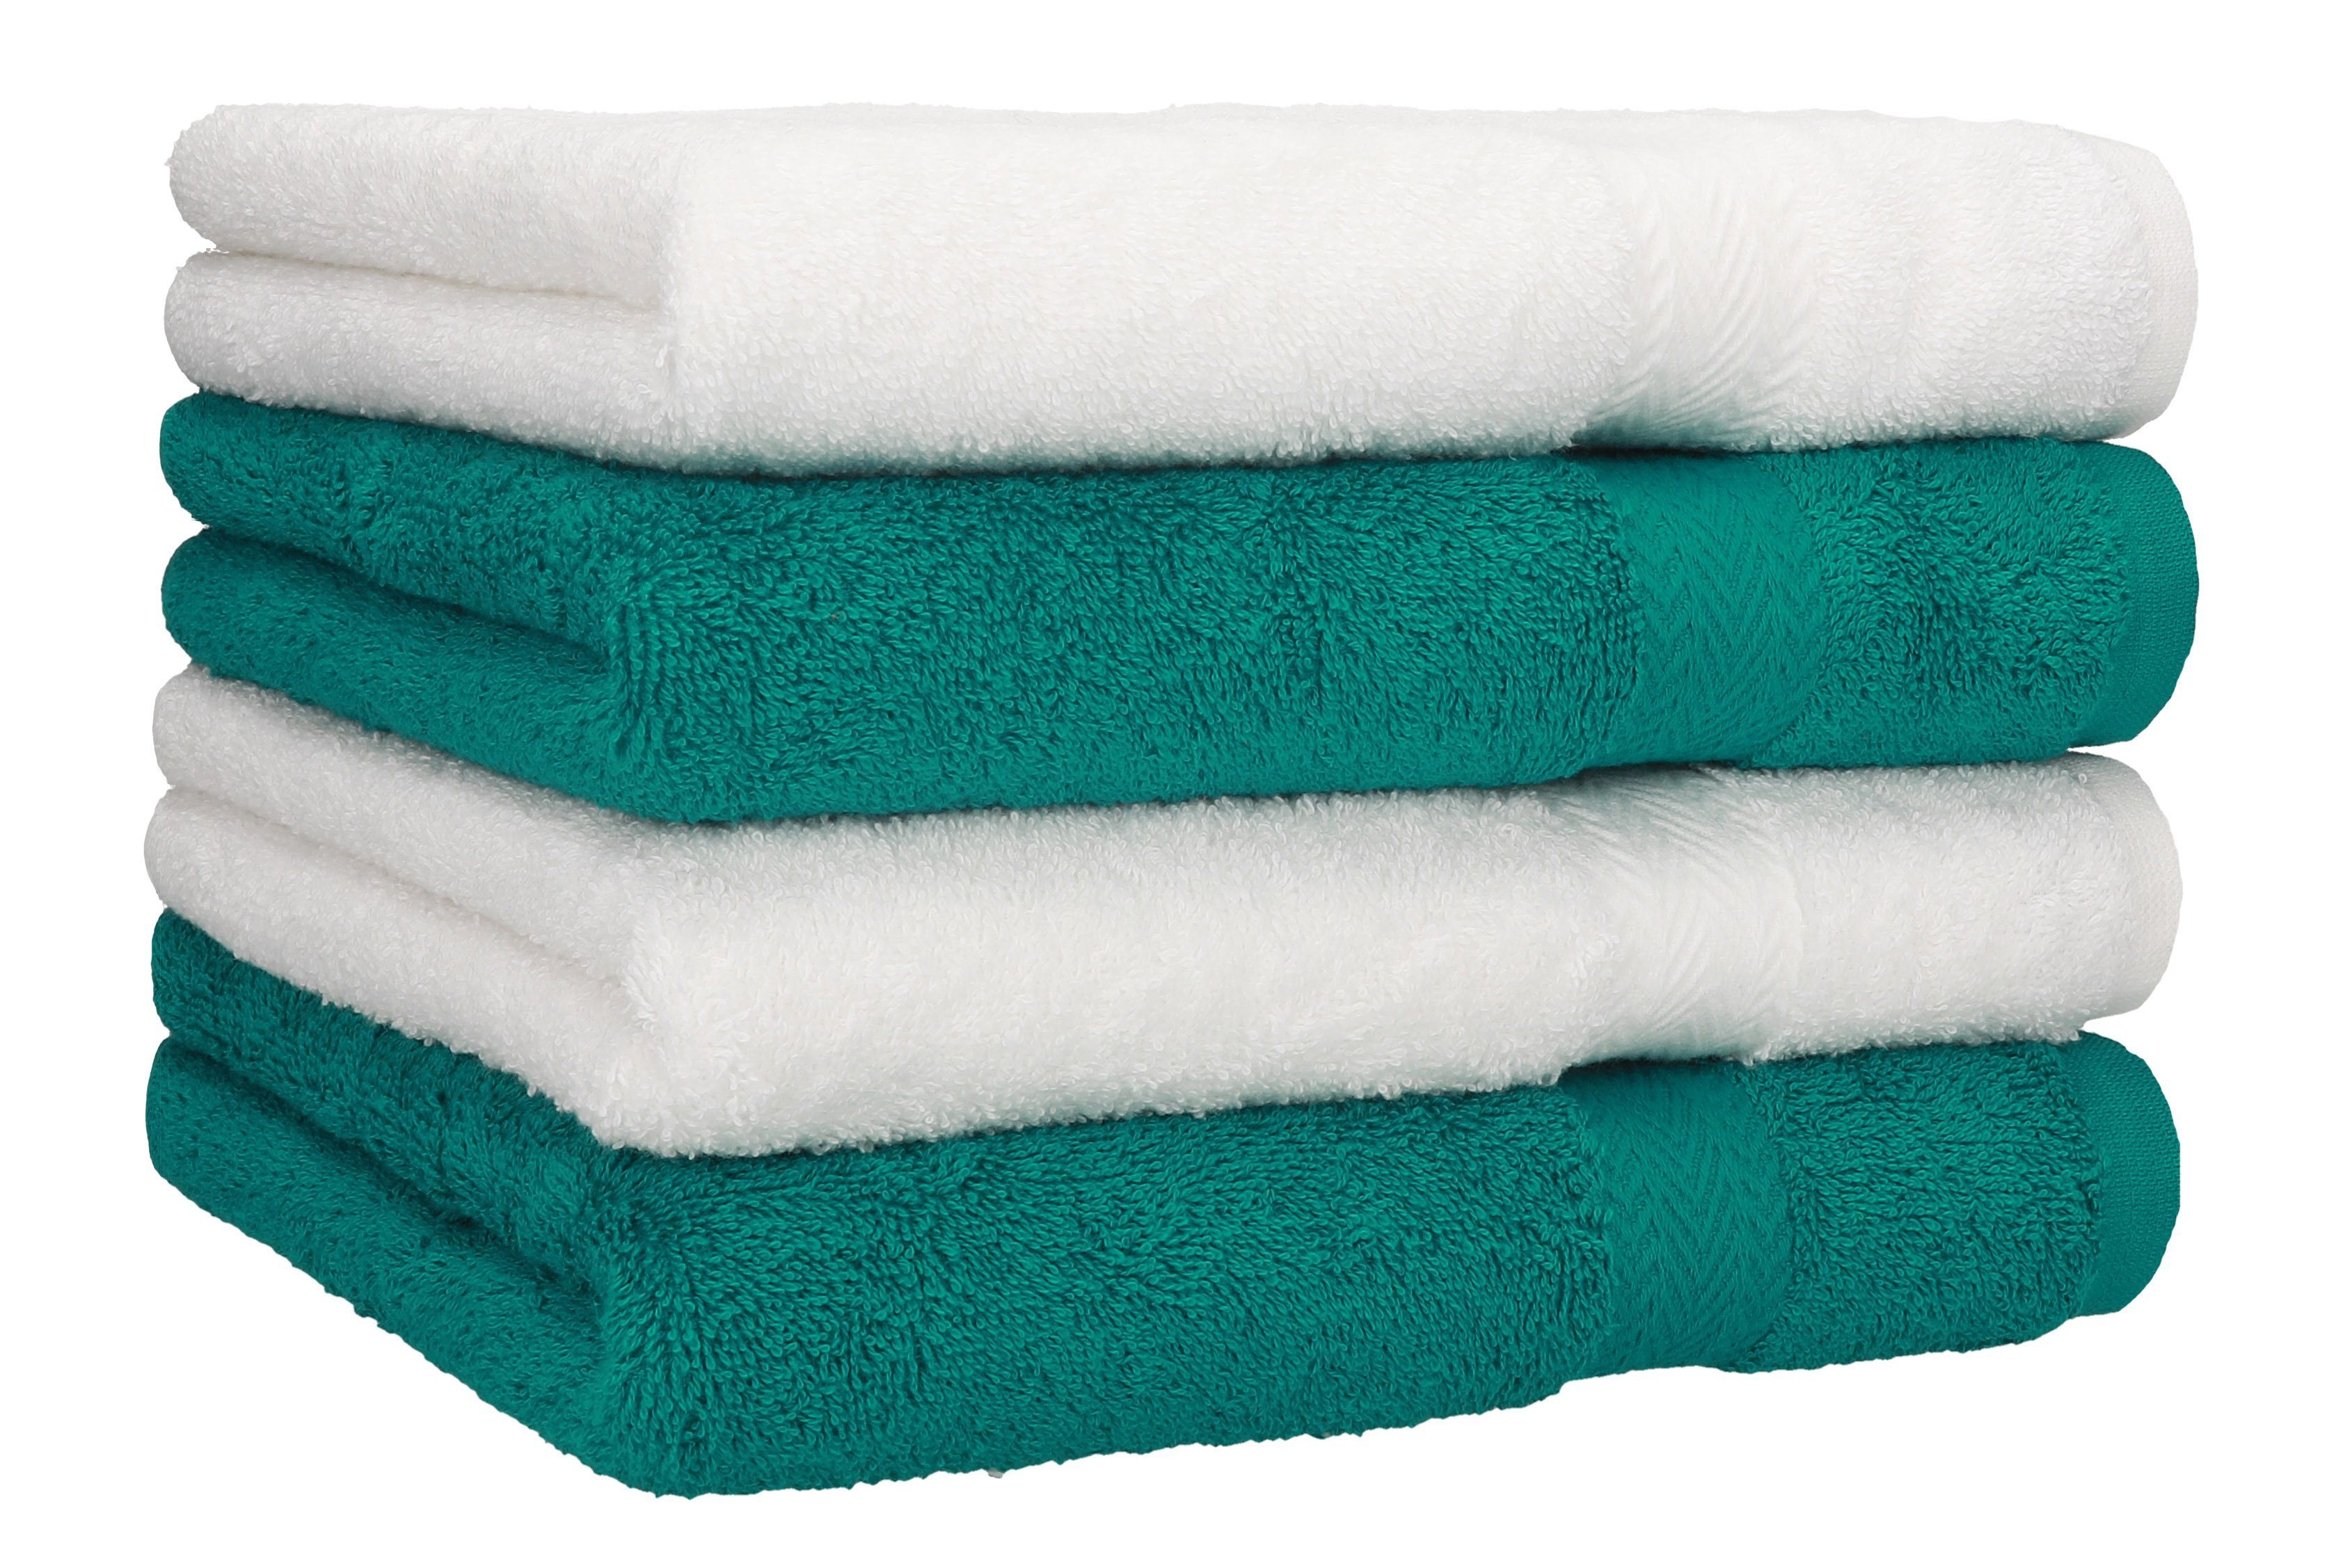 Betz Handtücher 4 Stück Handtücher Premium 4 Handtücher Farbe weiß und smaragdgrün, 100% Baumwolle